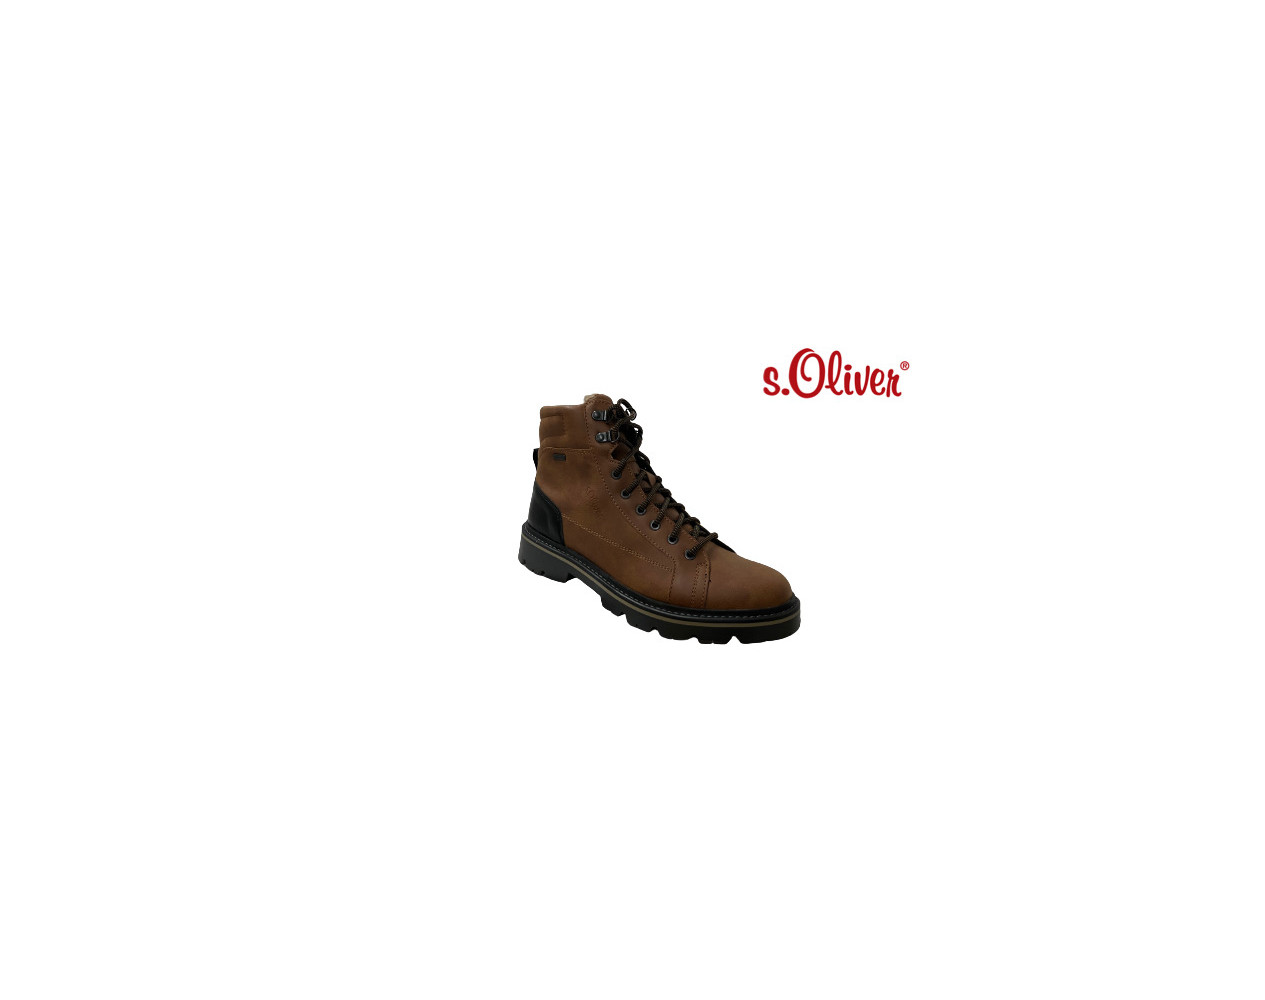 Pánska obuv S.OLIVER 5-16228-41 COGNAC